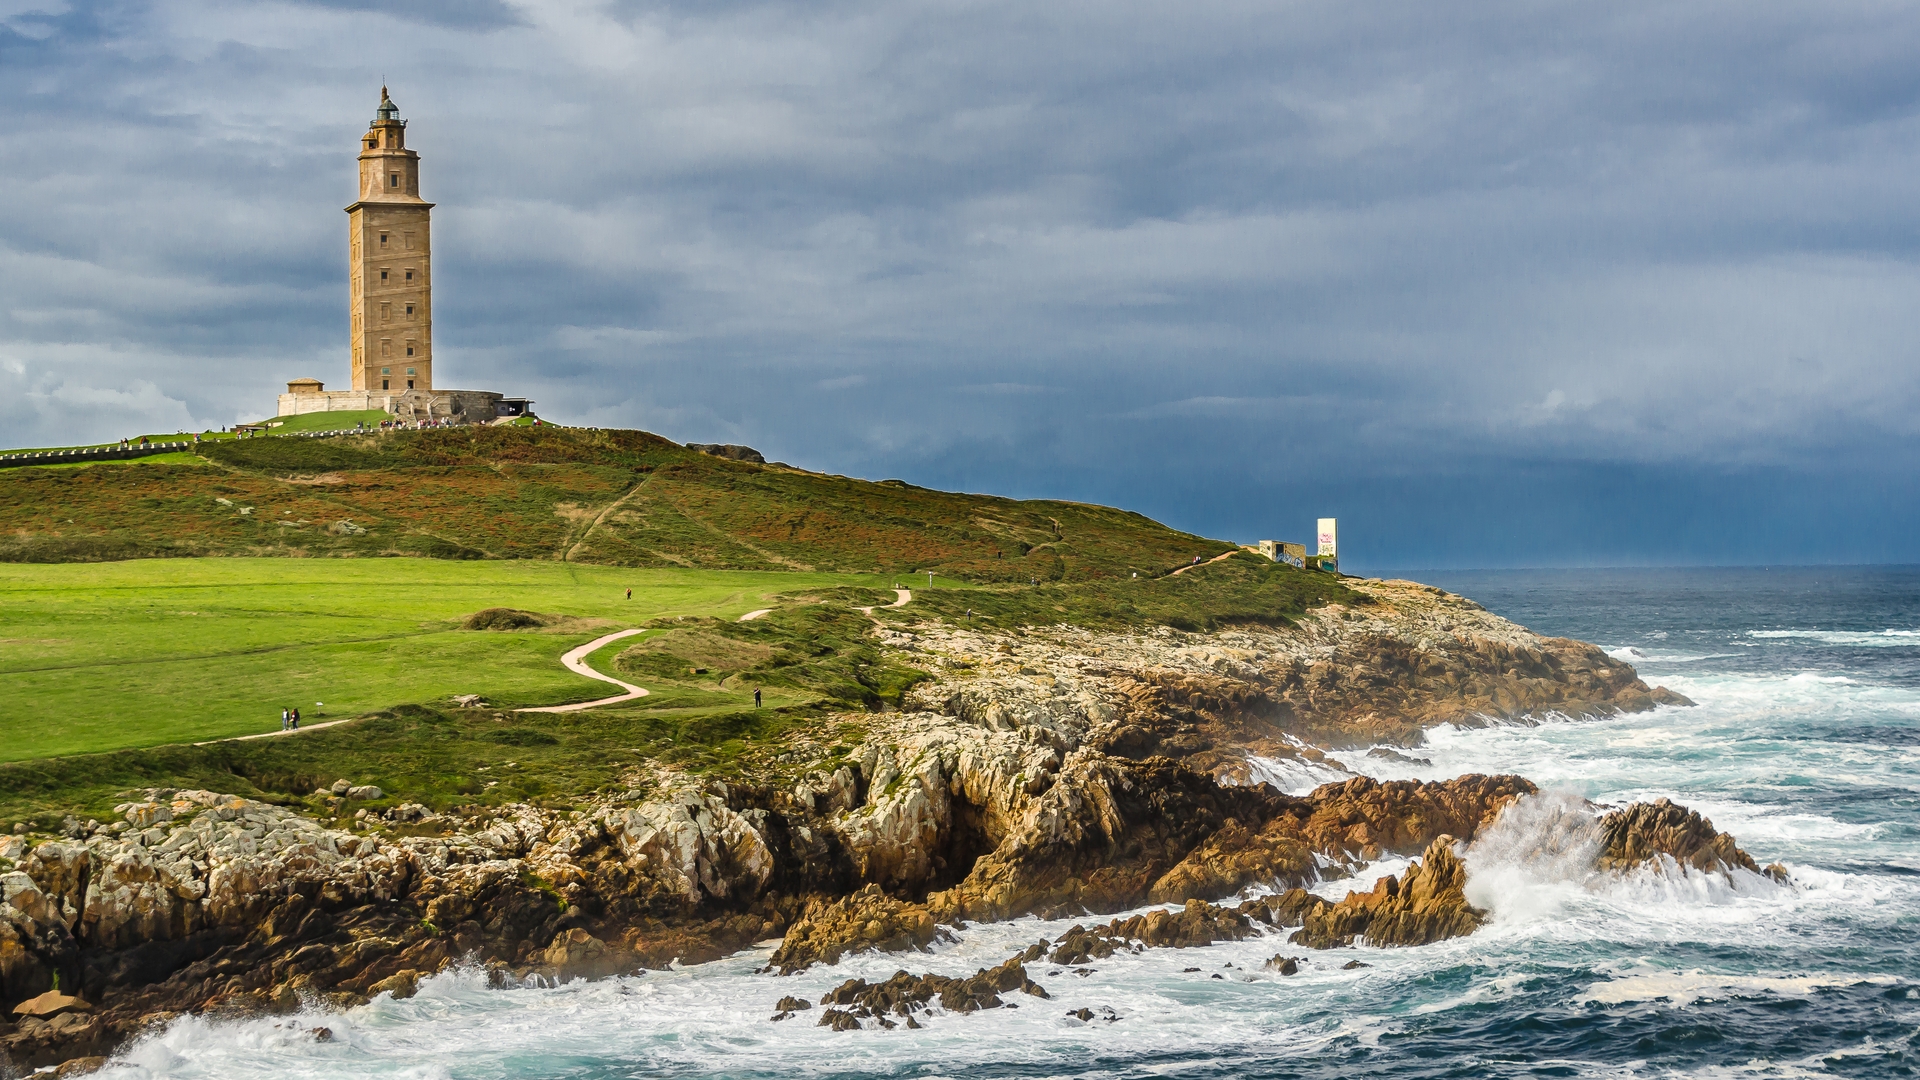 General 1920x1080 landscape Coruña Spain lighthouse Torre de Hercules sea clouds waves water sky rocks building